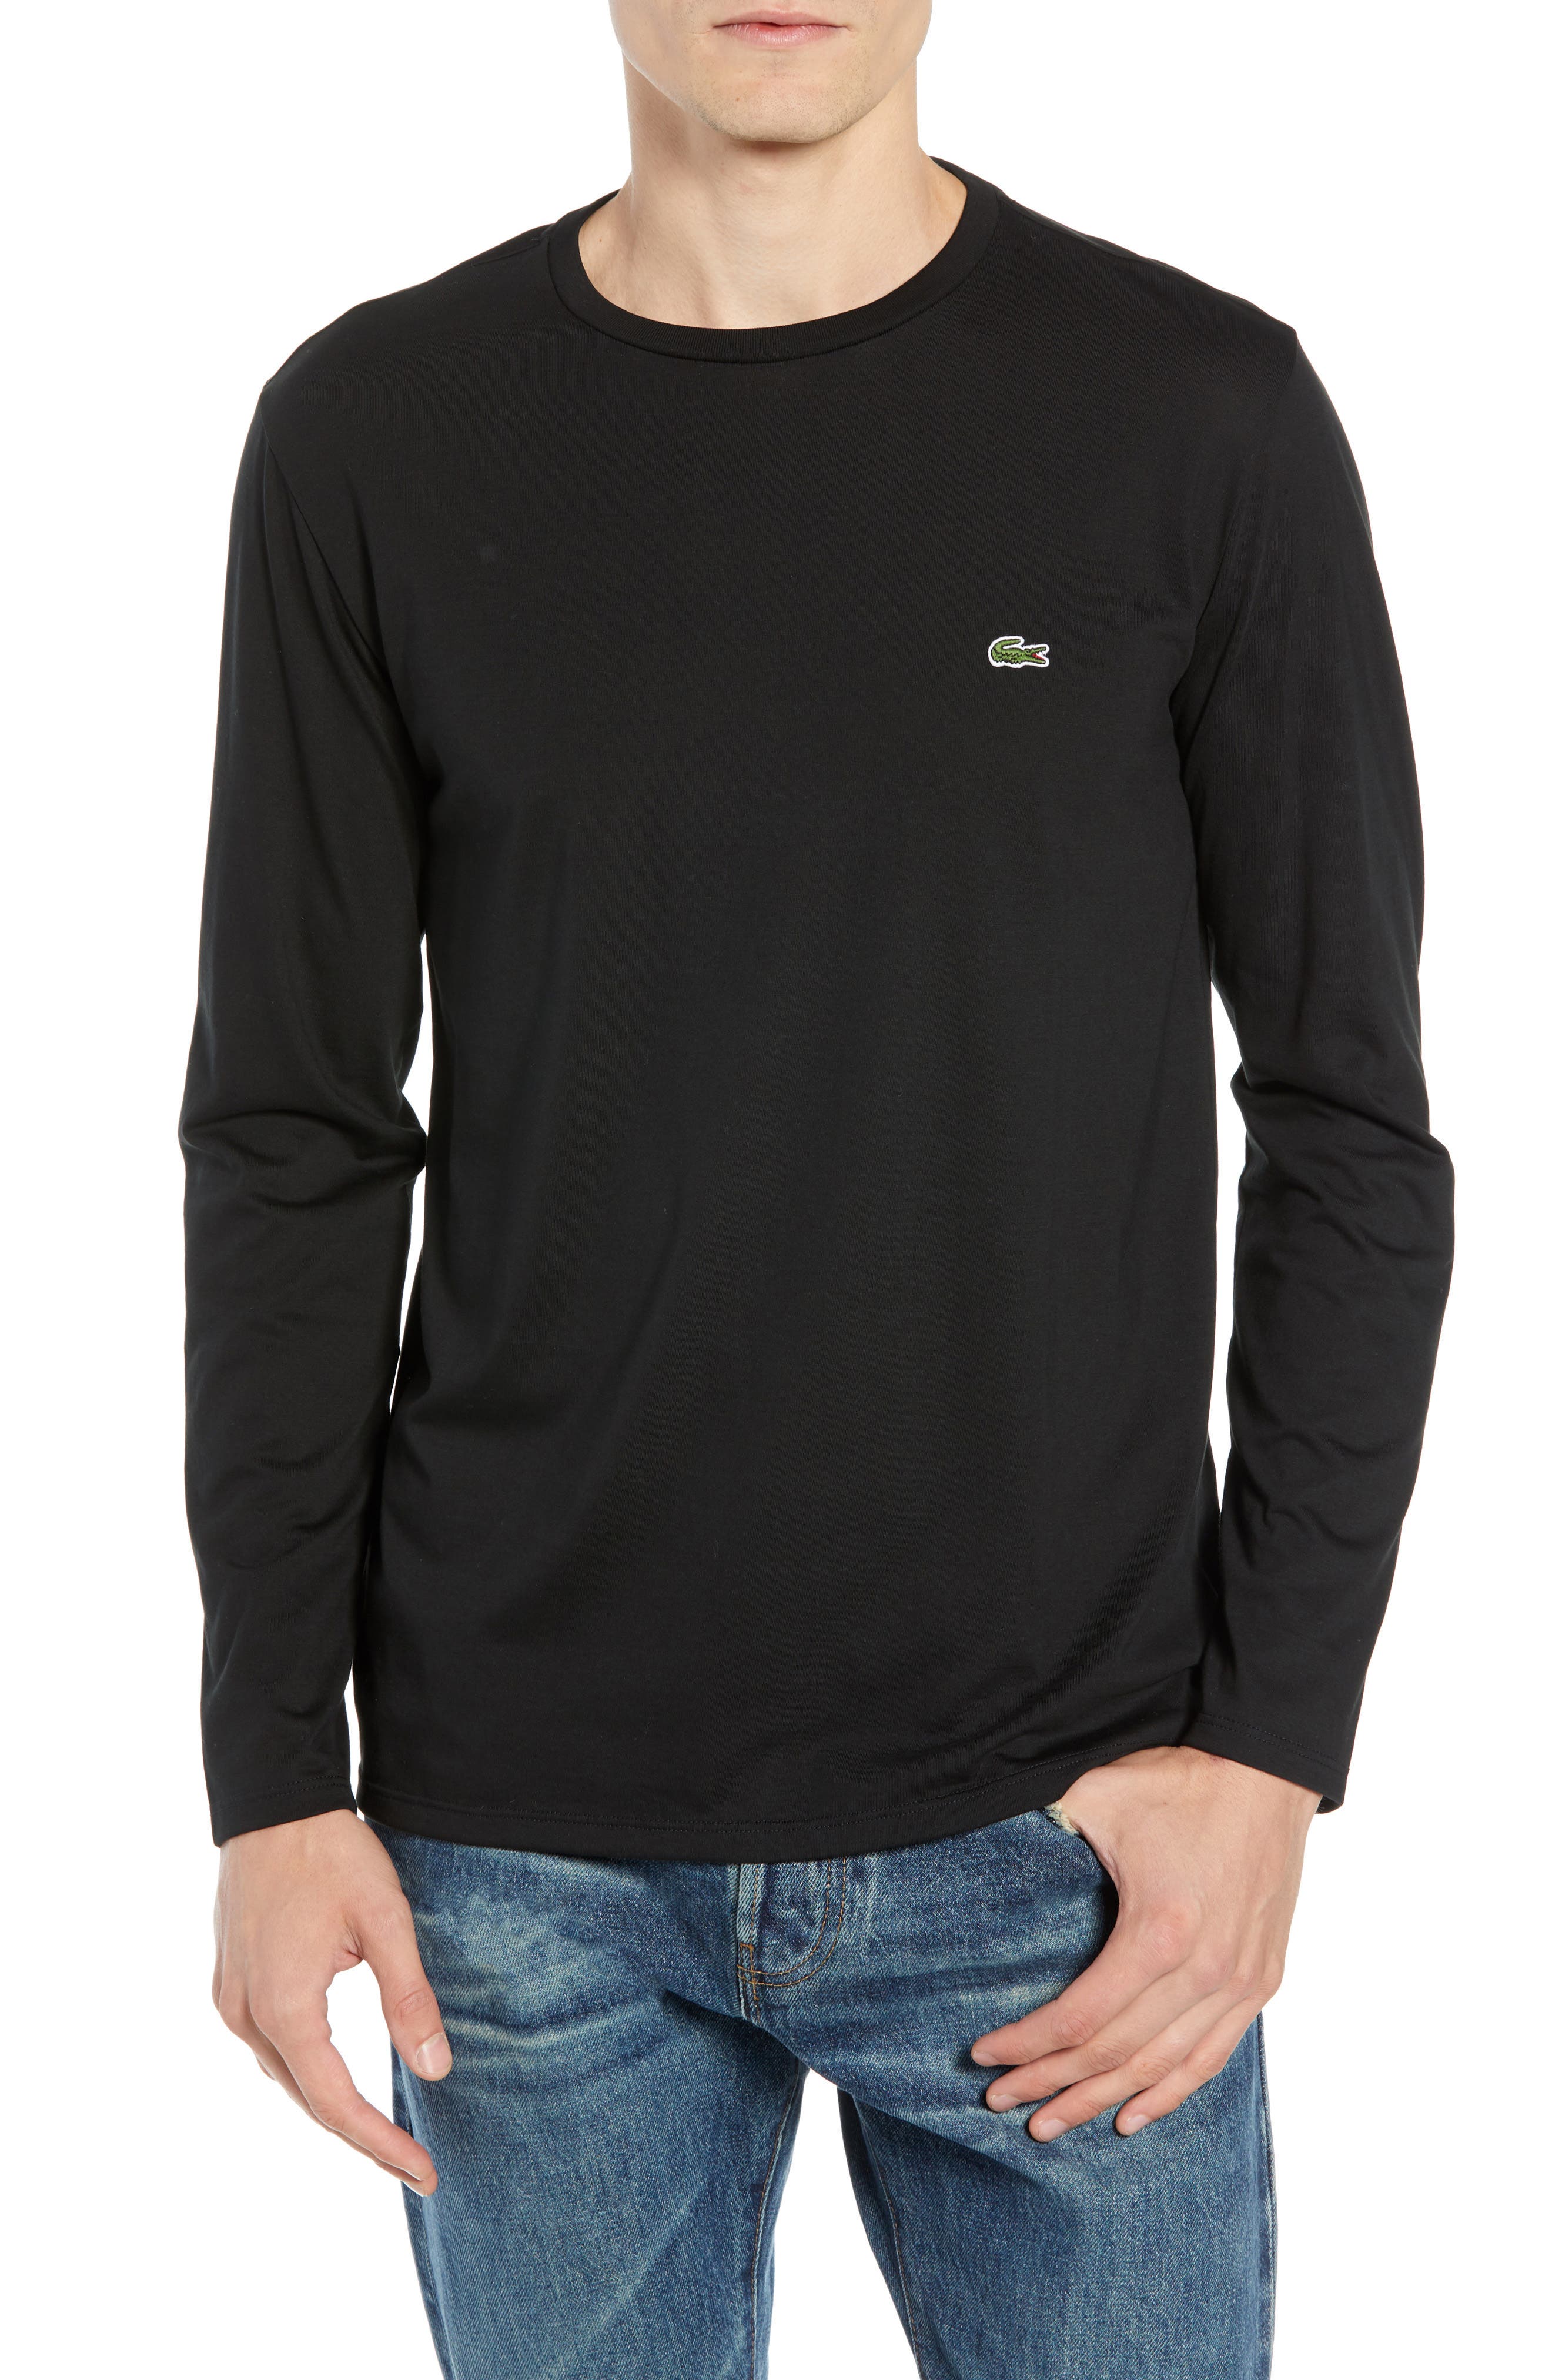 Lacoste Men's T-Shirts, stylish comfort clothing